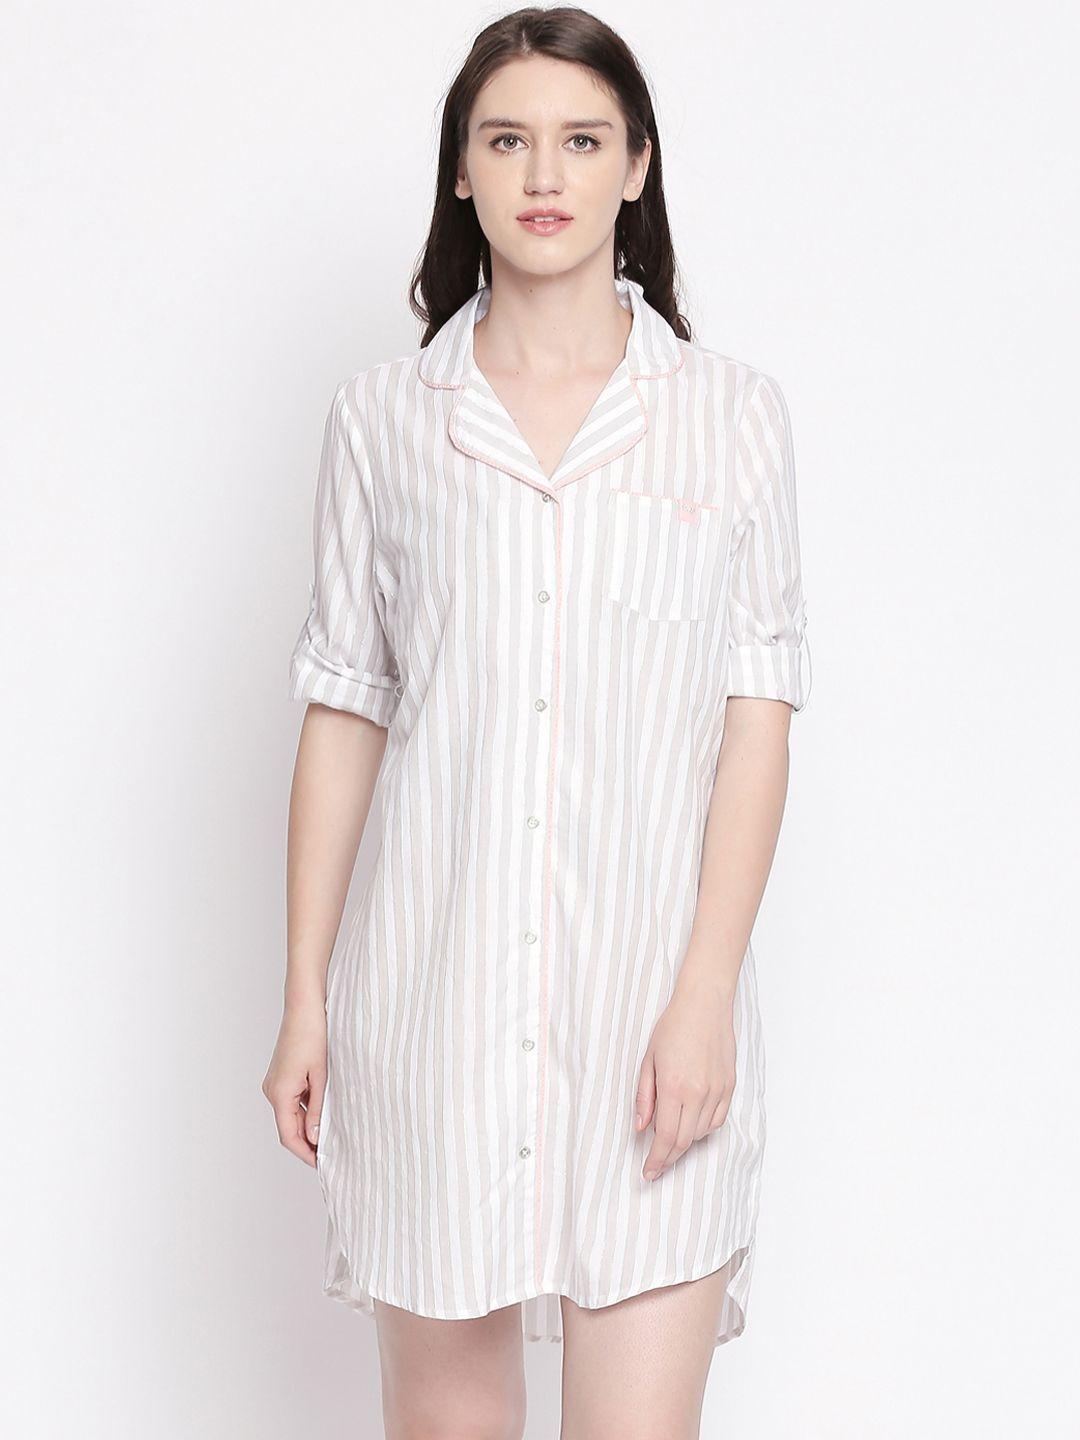 dreamz by pantaloons pink & white striped pure cotton sleep shirt